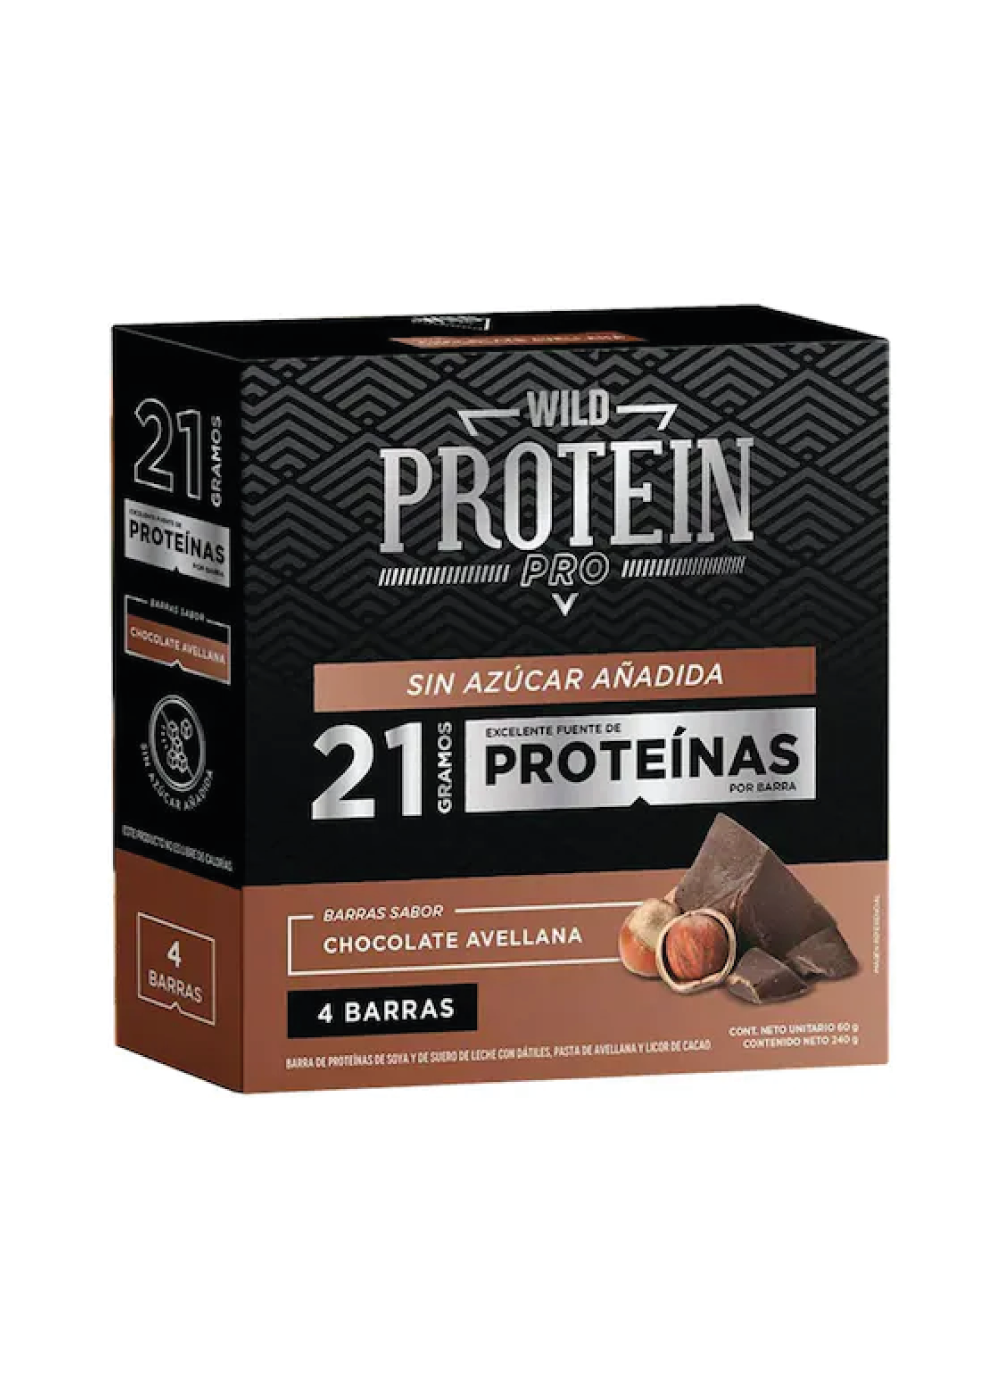 Barritas Wild Protein Pro Chocolate Avellana 60gr (Caja 4 Unidades)